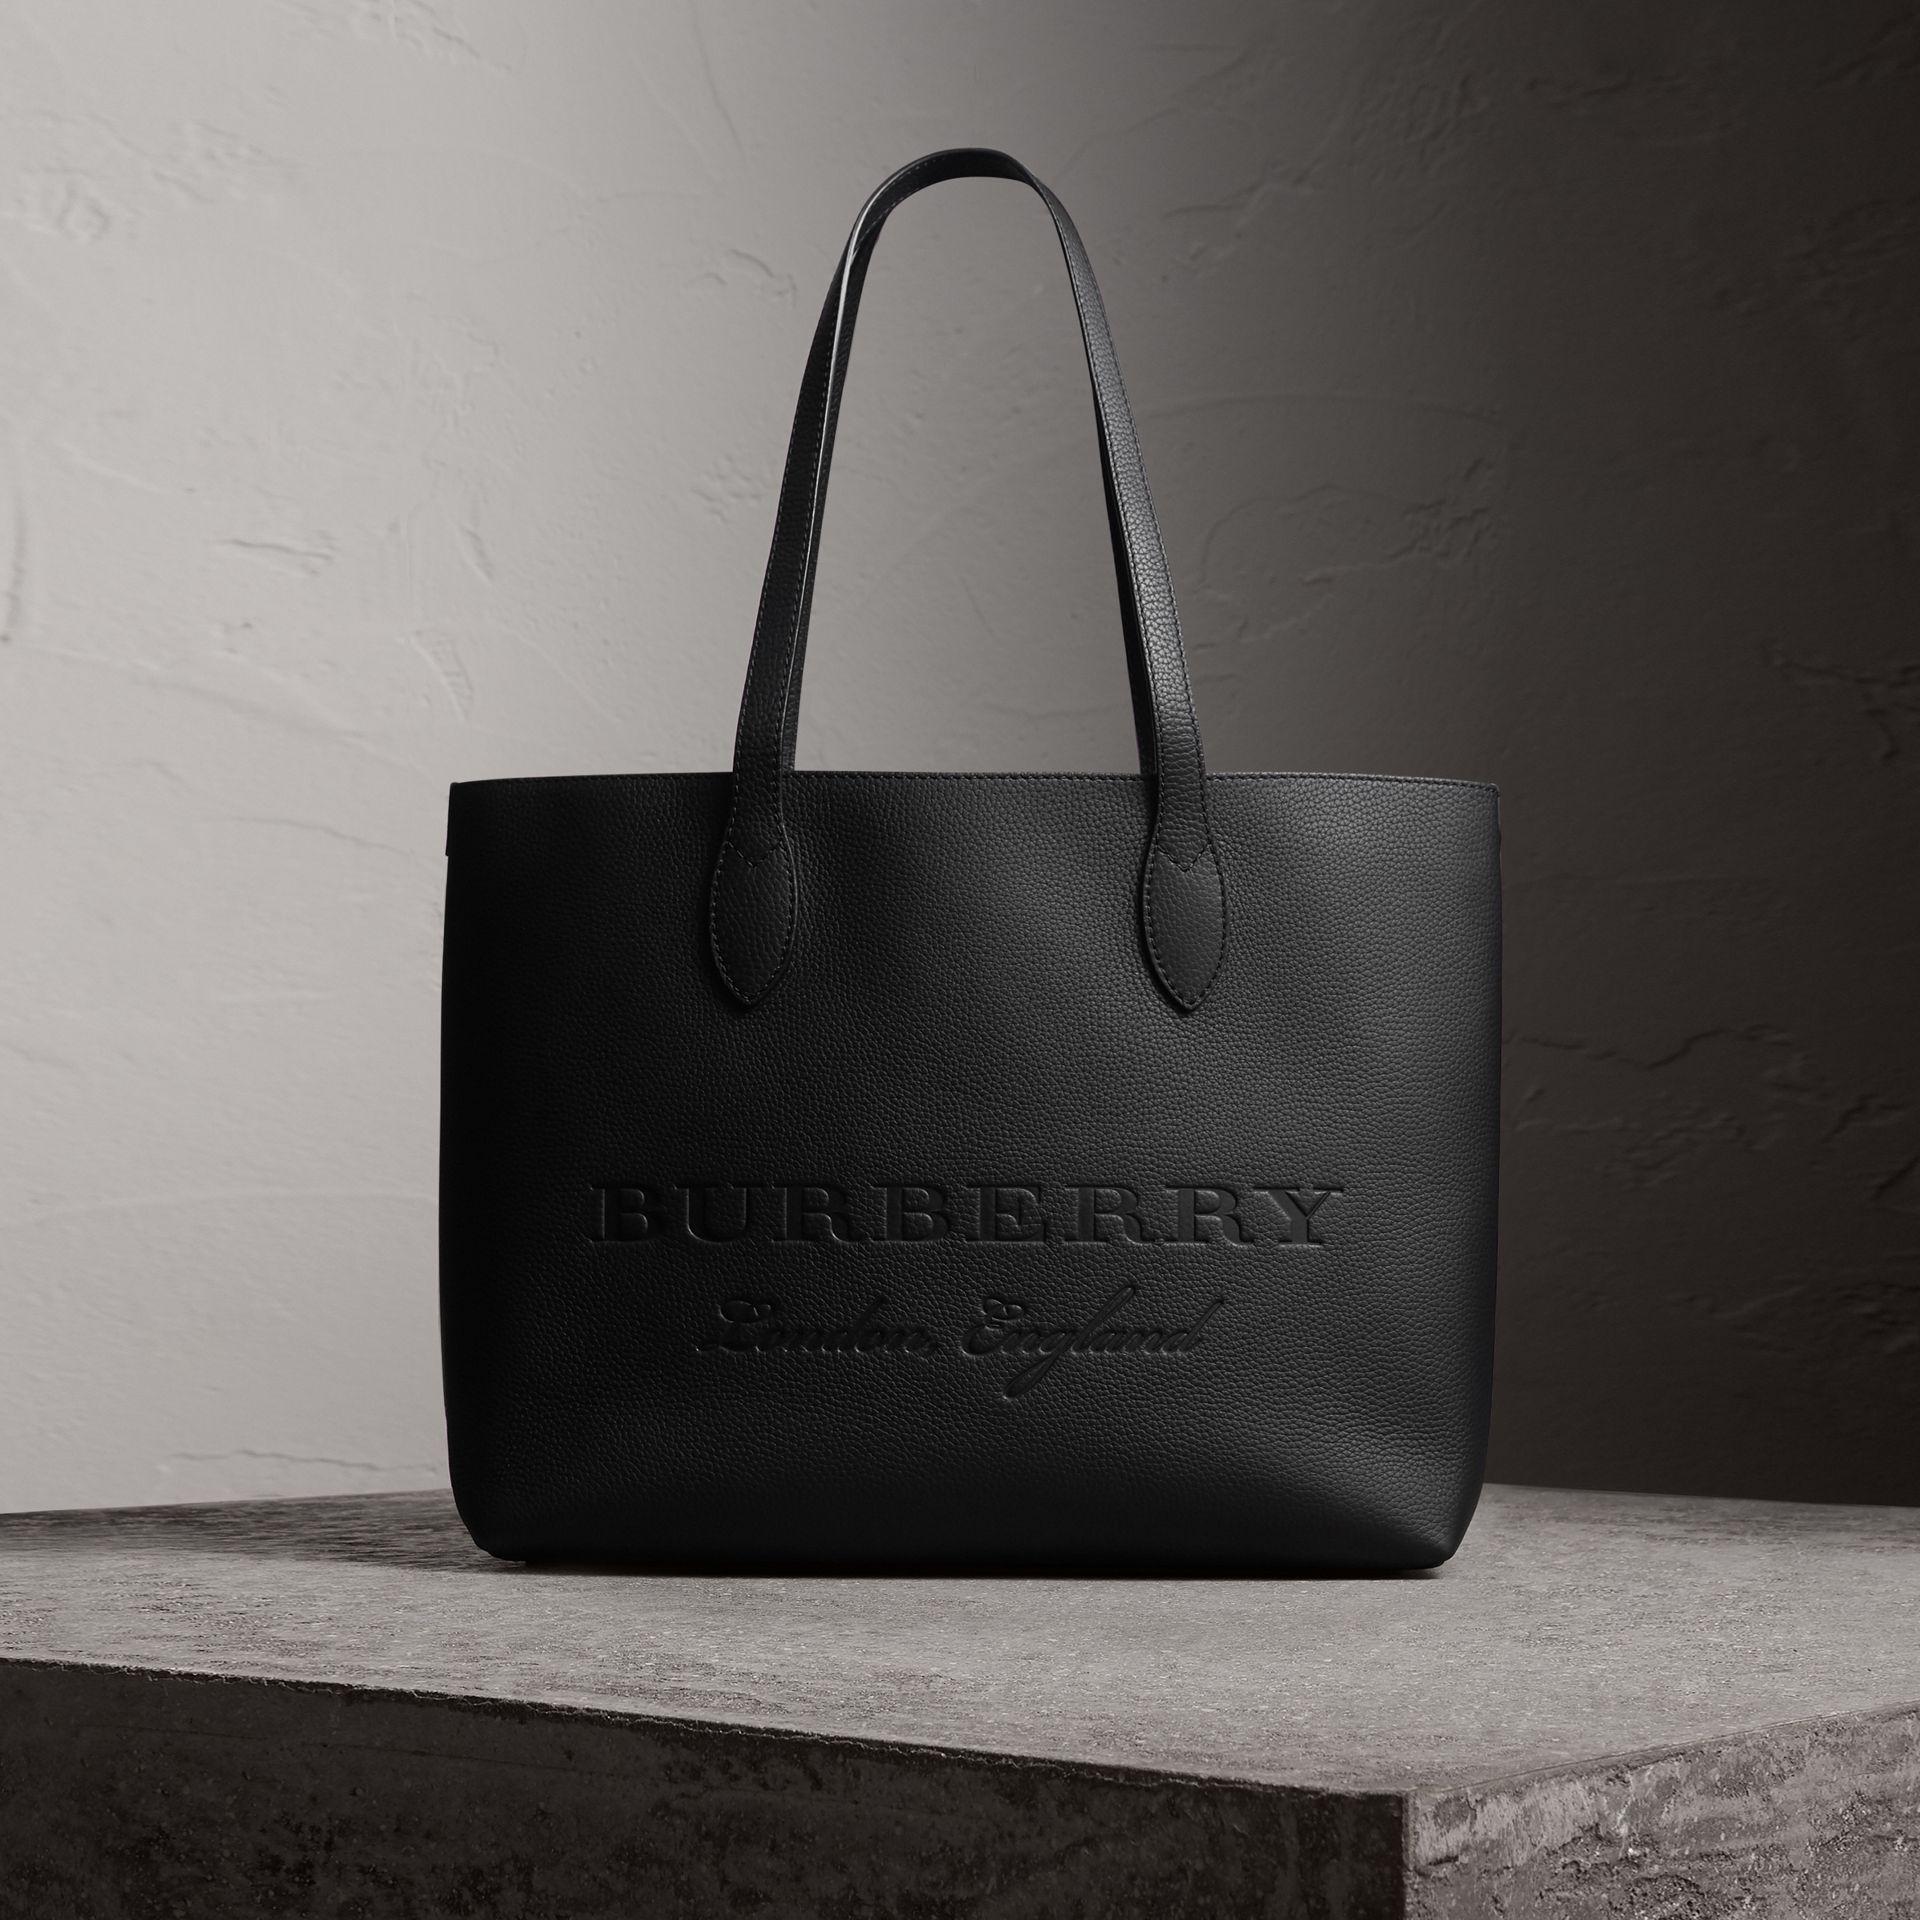 Black Burberry Leather Handbag